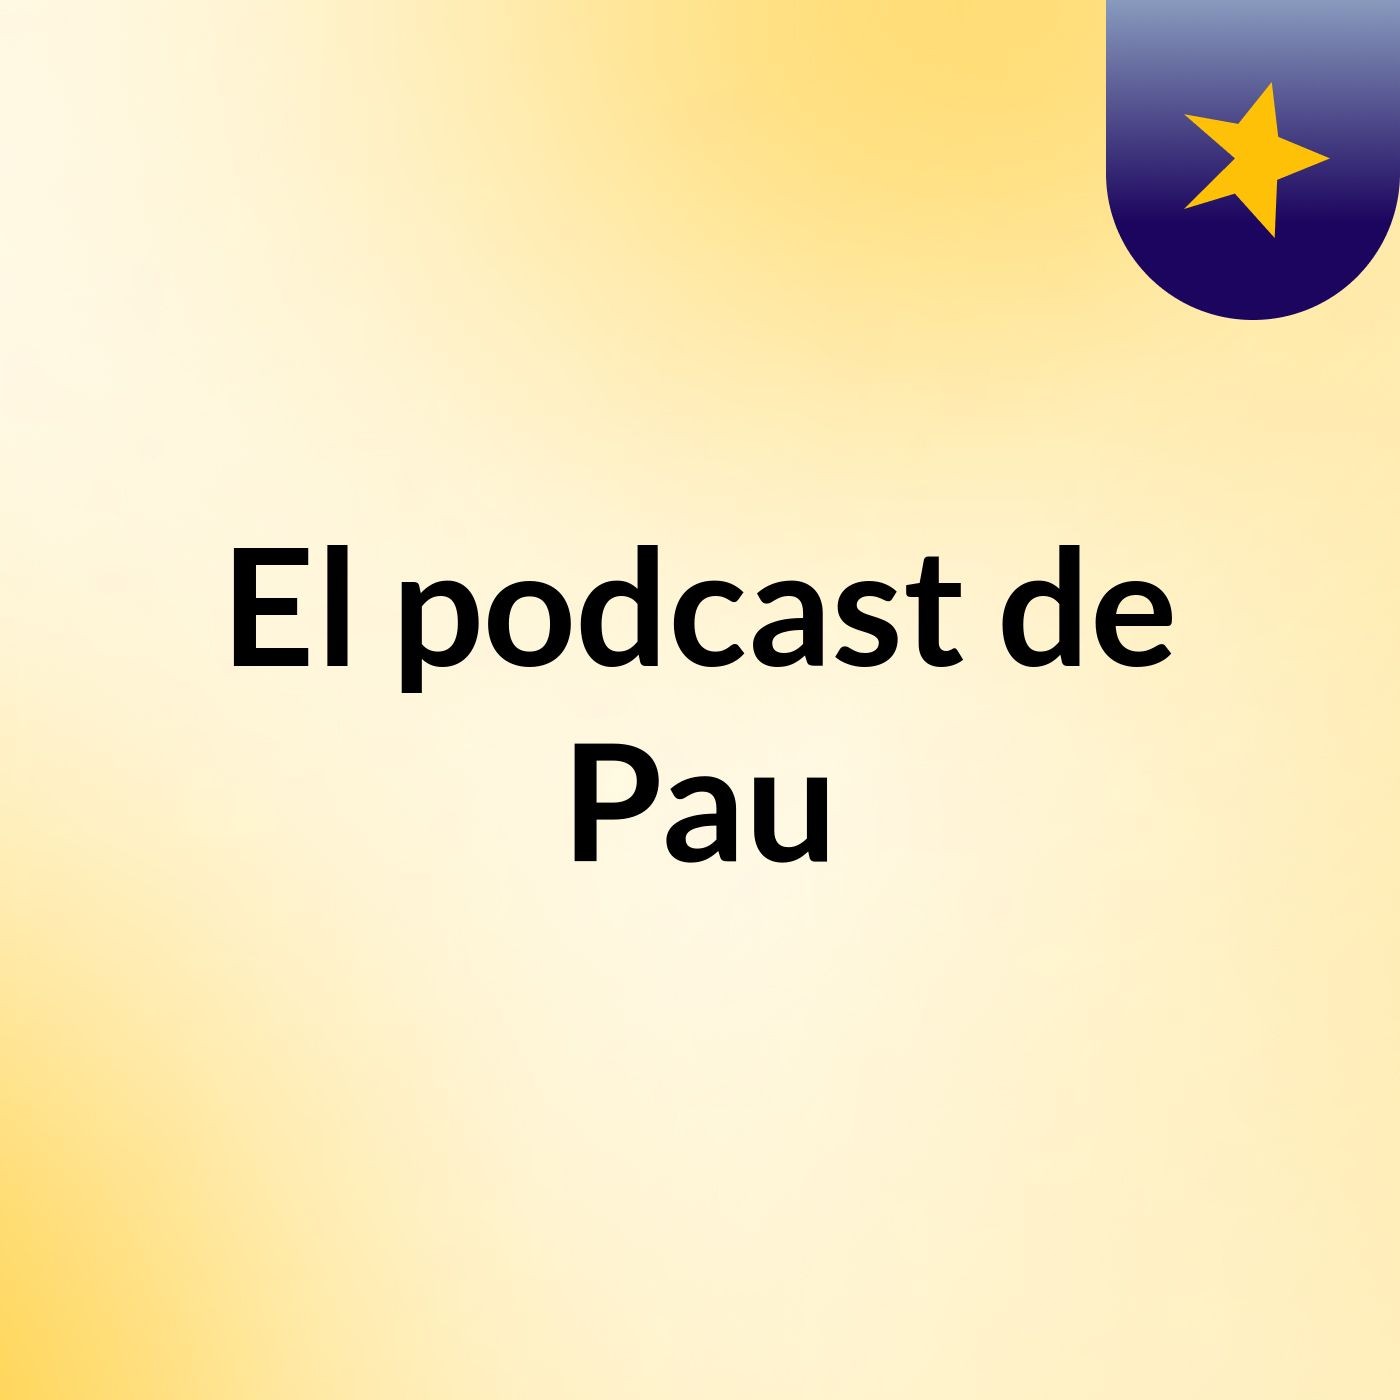 Episodio 3 - El podcast de Pau